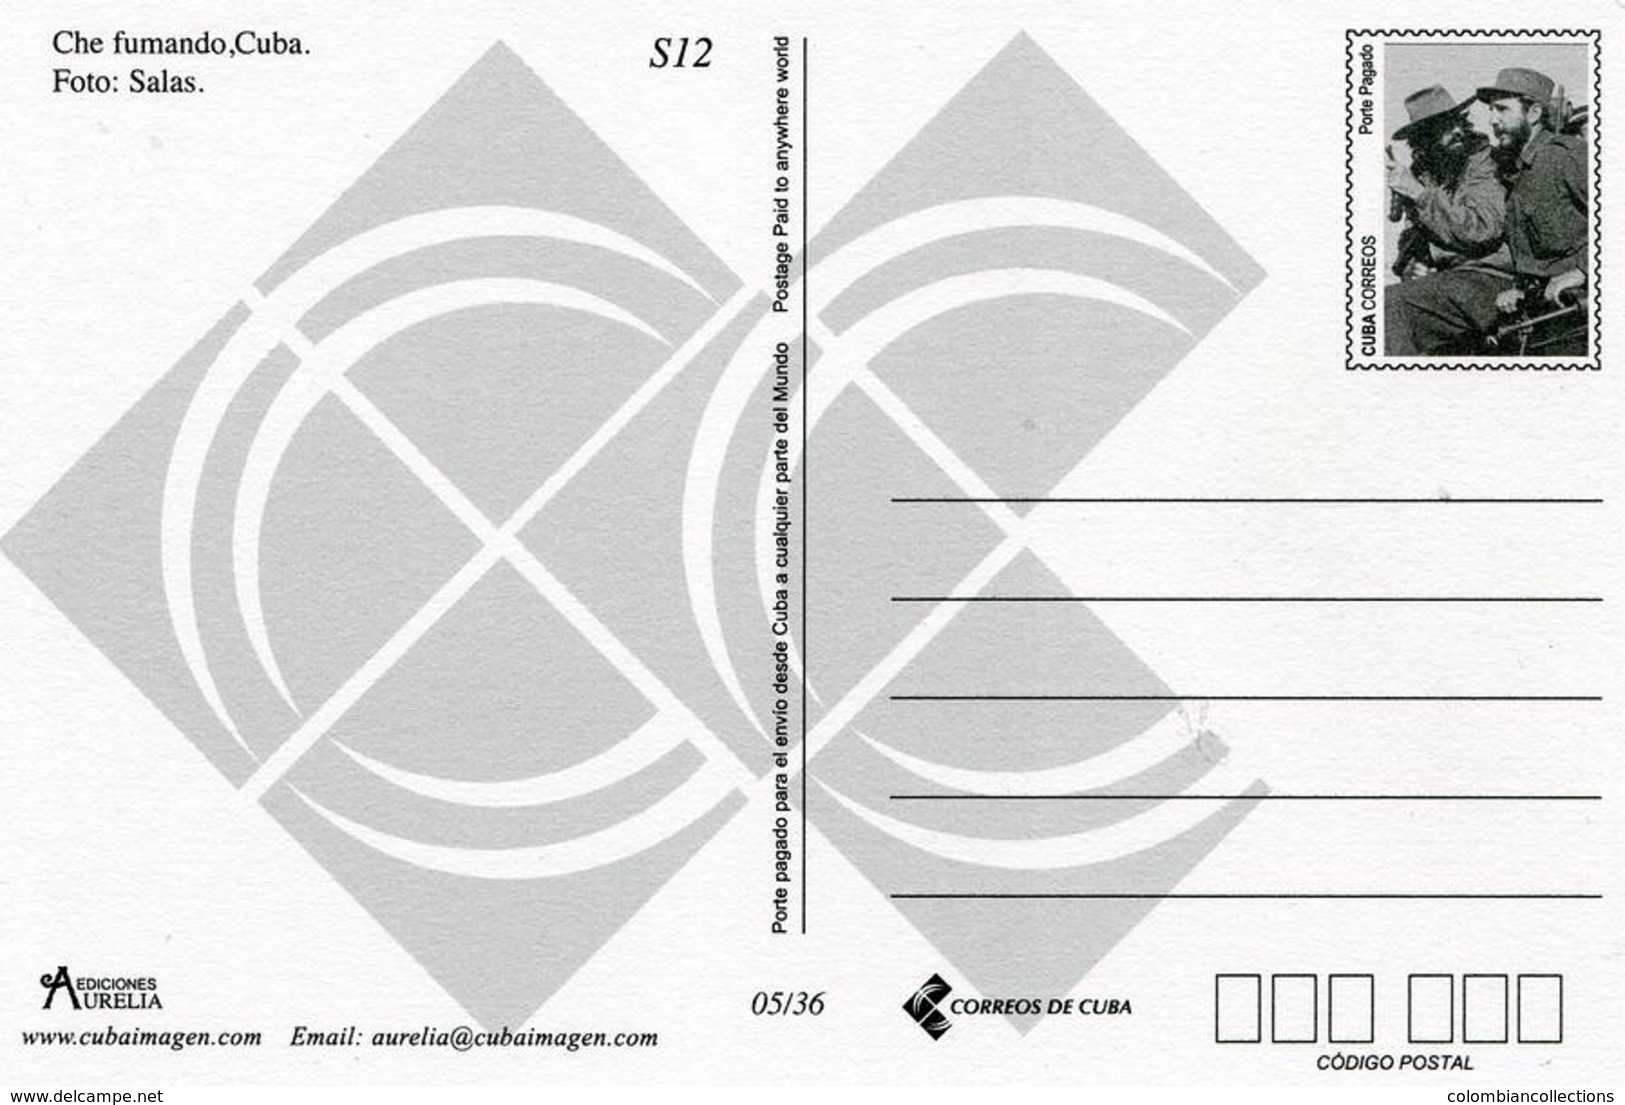 Lote PEP1274, Cuba, Entero Postal, Postcard, Stationery, 2013, Ediciones Aurelia, 5/36, Che Fumando, Foto Salas - Maximum Cards